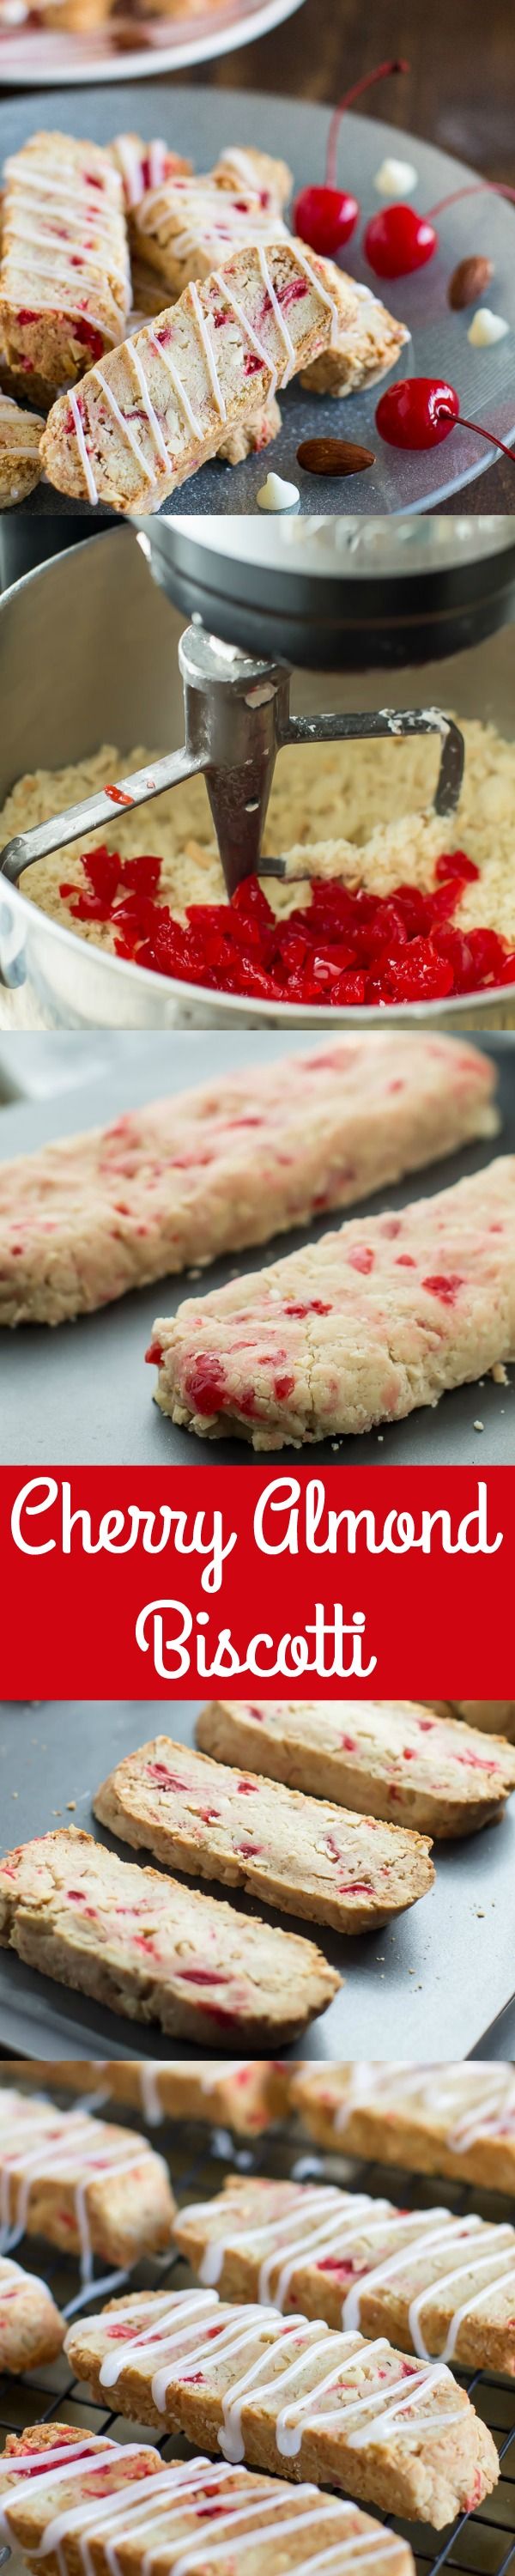 Cherry Almond Biscotti